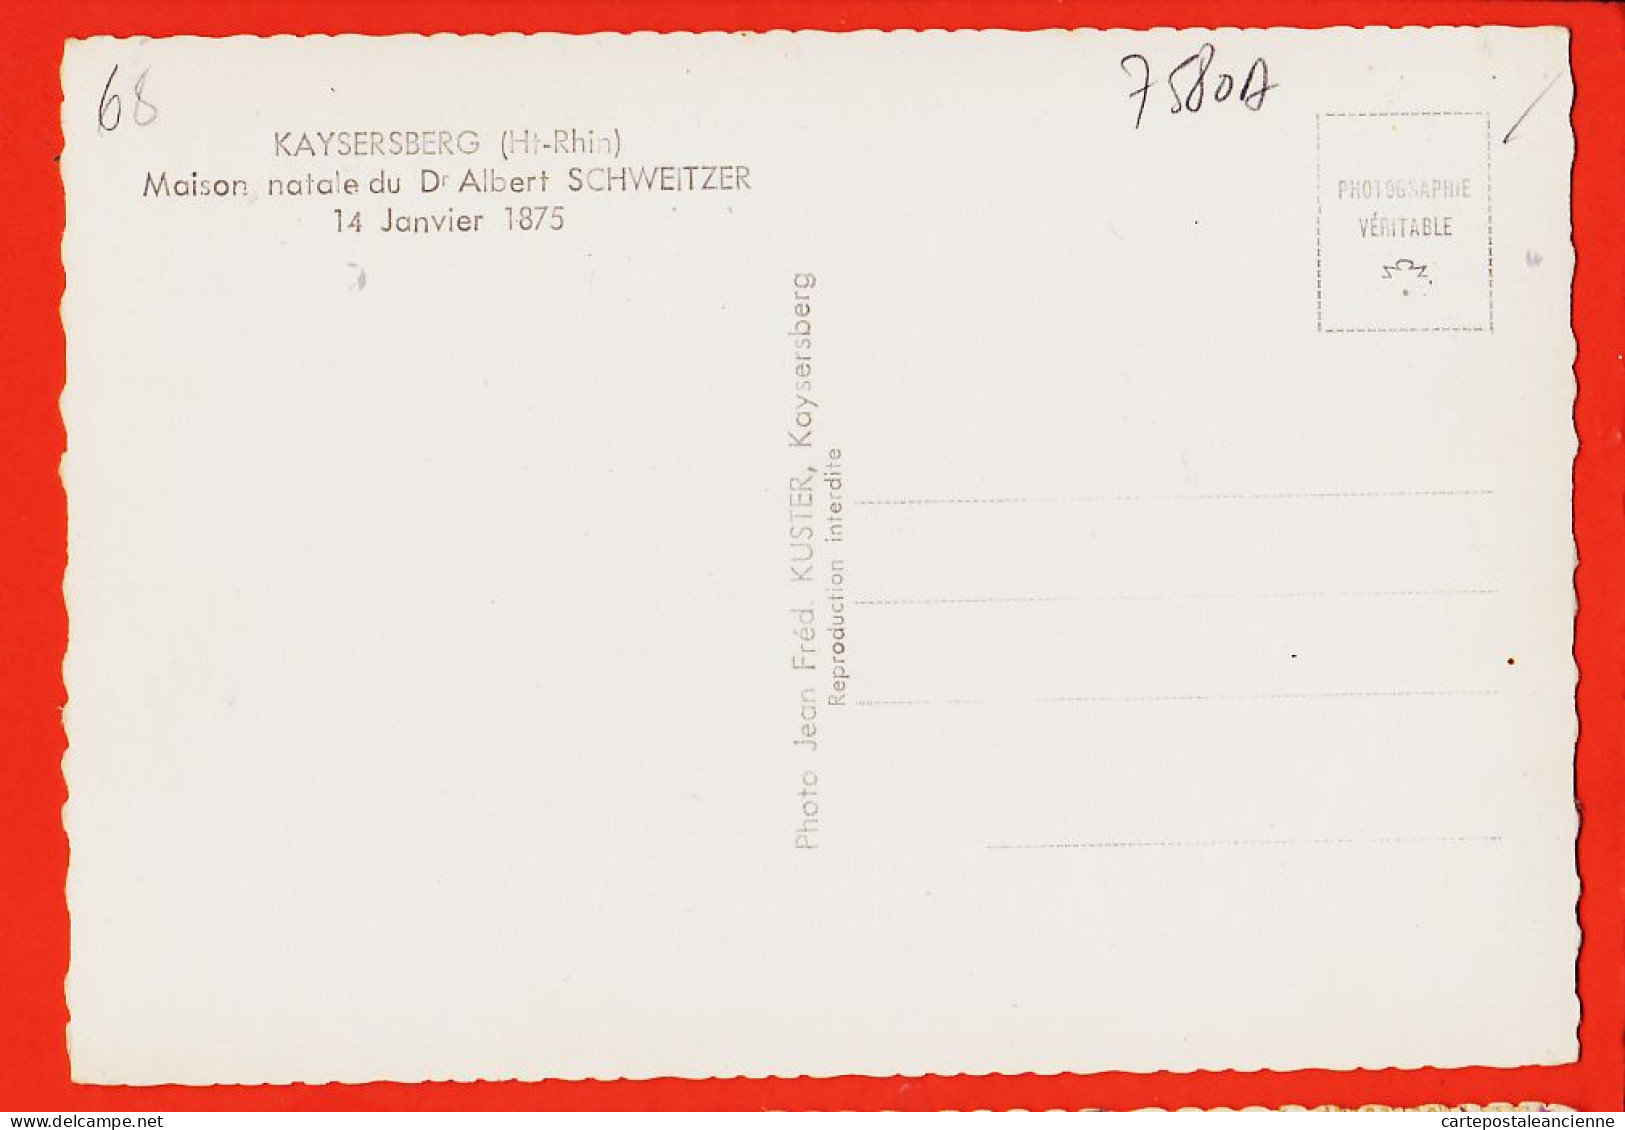 35621 / KAYSERSBERG 68-Haut Rhin Maison Natale 14 Janvier 1875 Albert SCHWEITZER 1950s Photo-Bromure GF Jean Fred KUSTER - Kaysersberg